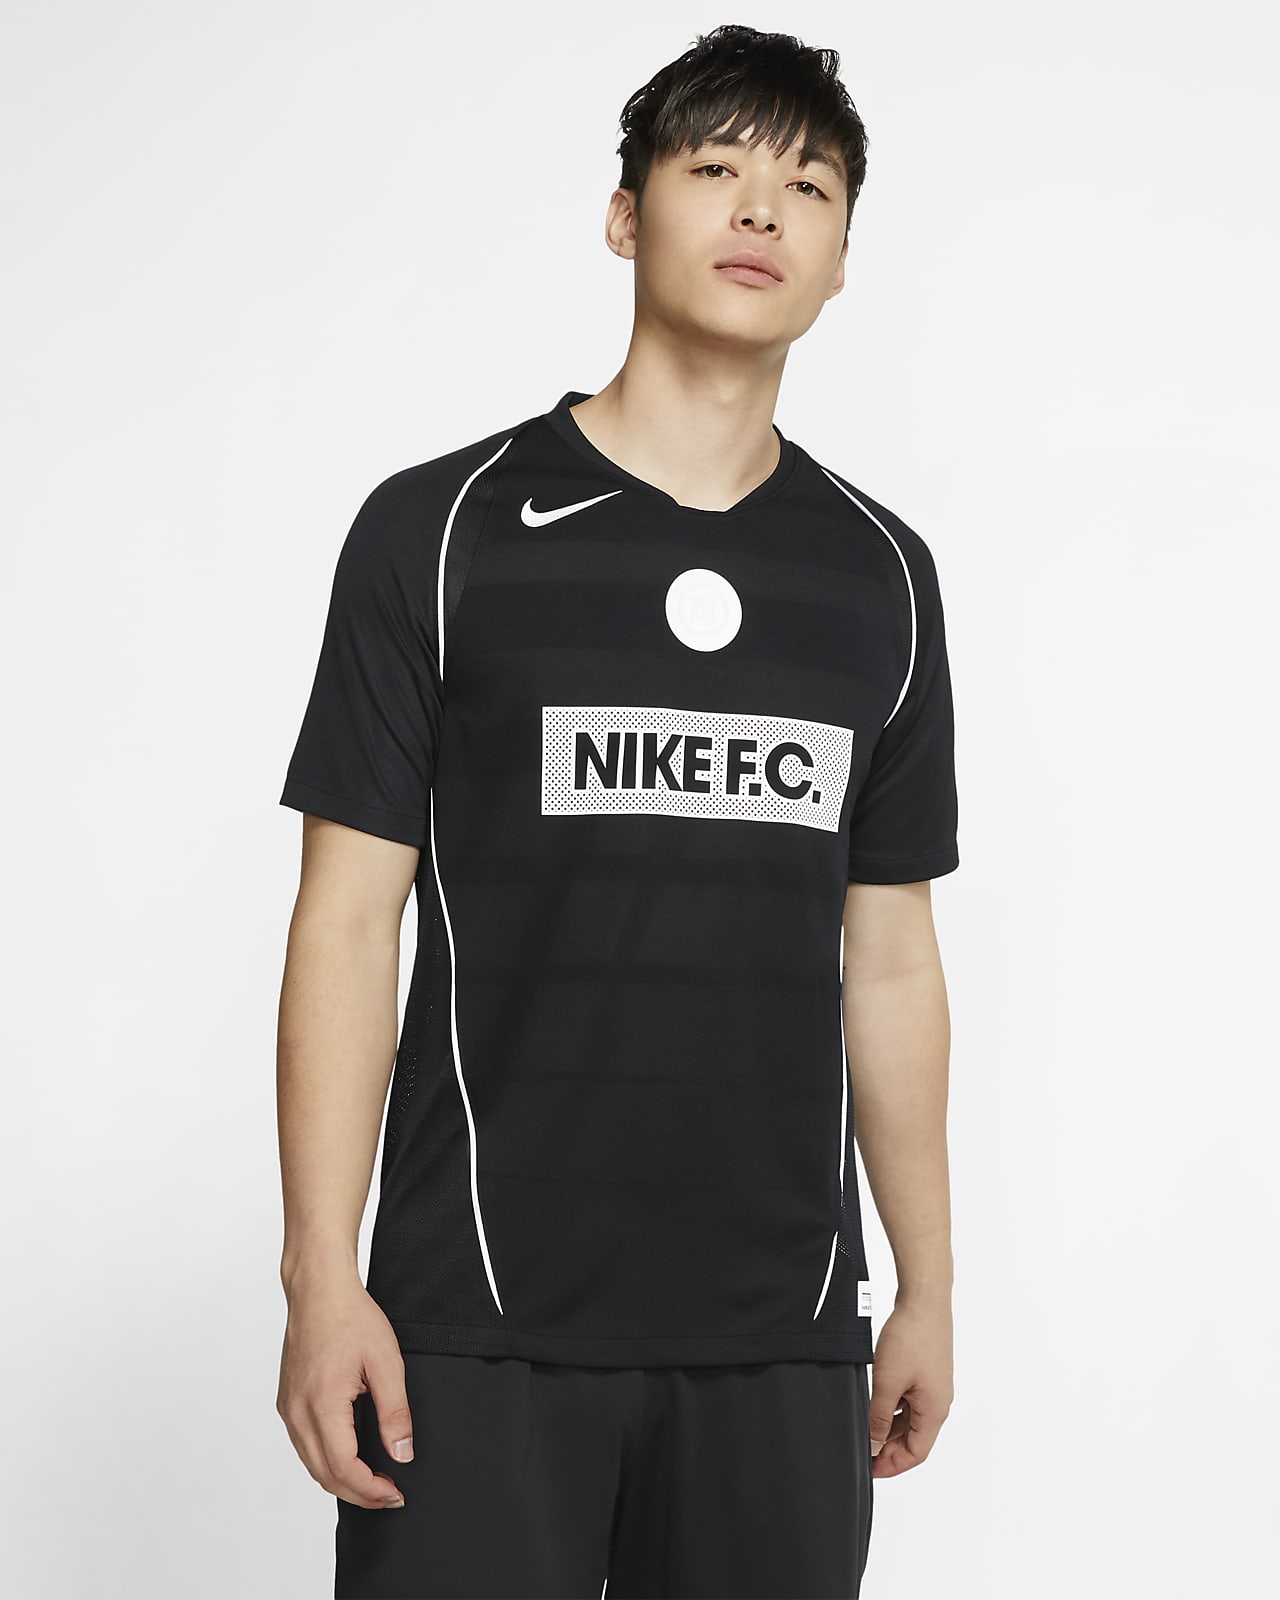 Nike F.C. Home Men's Short-Sleeve Football Shirt. Nike LU